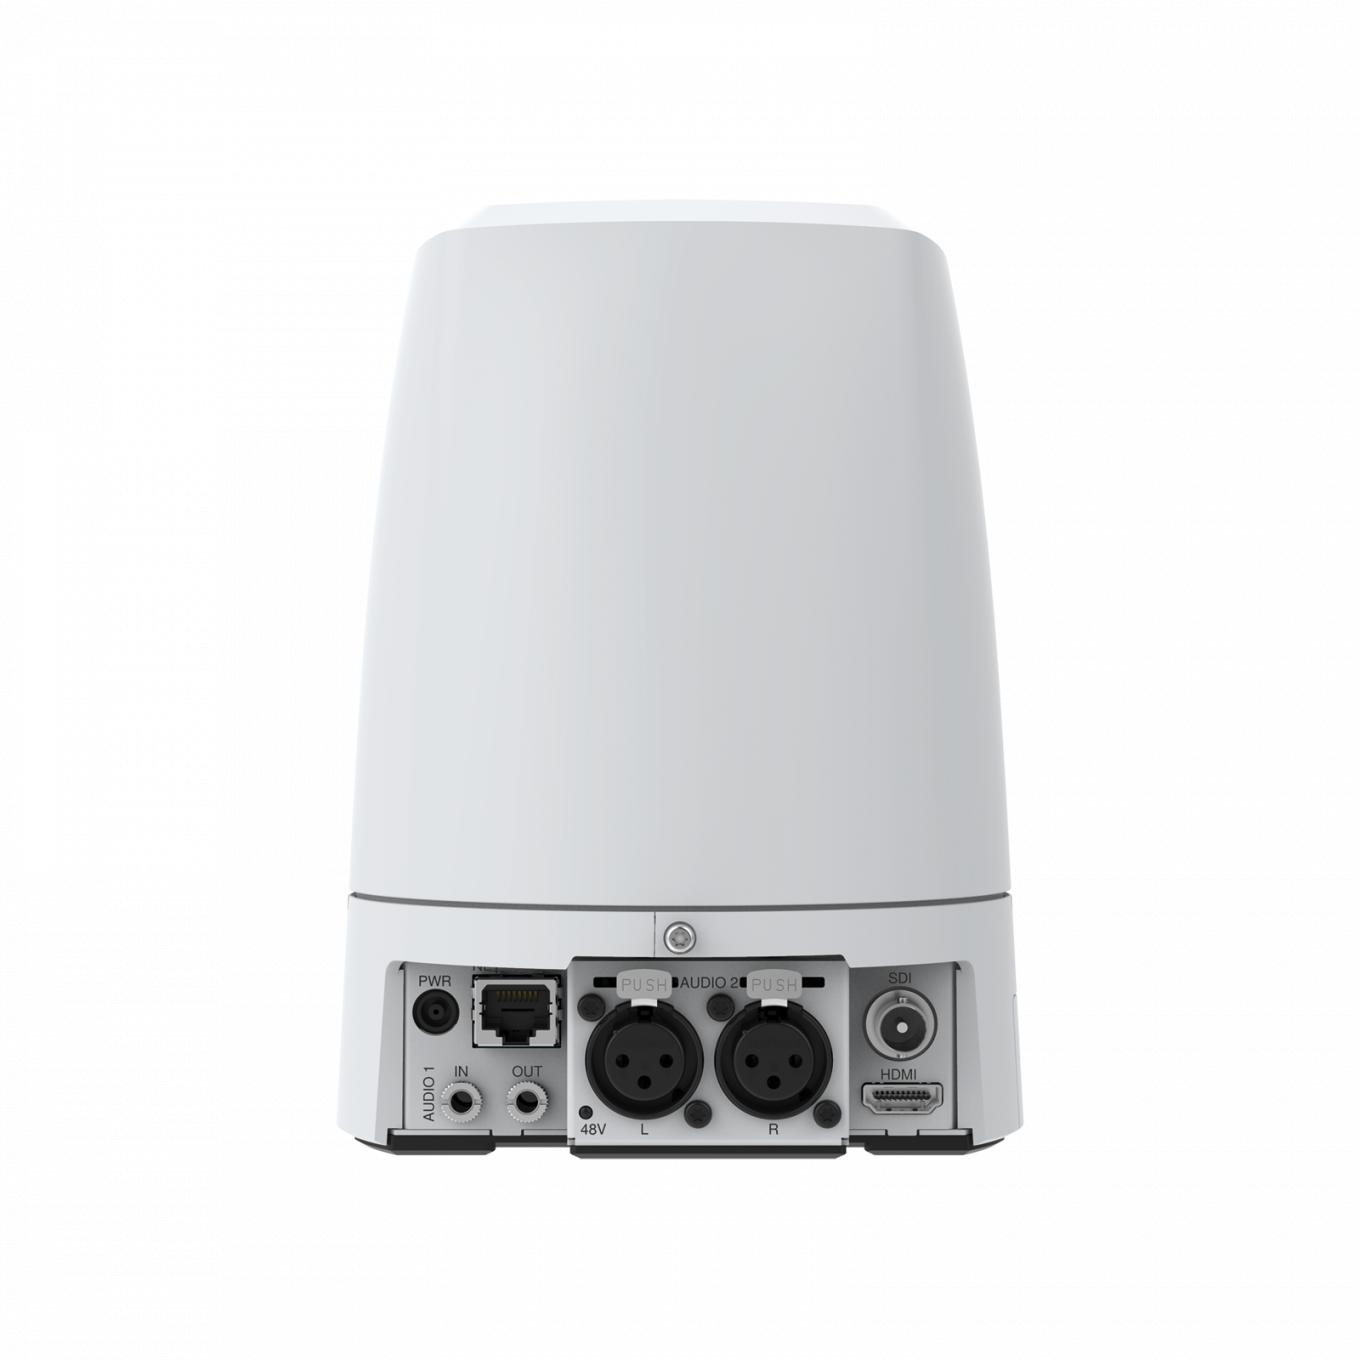 AXIS V5925 PTZ Network Camera fornisce supporto VISCA e VISCA over IP